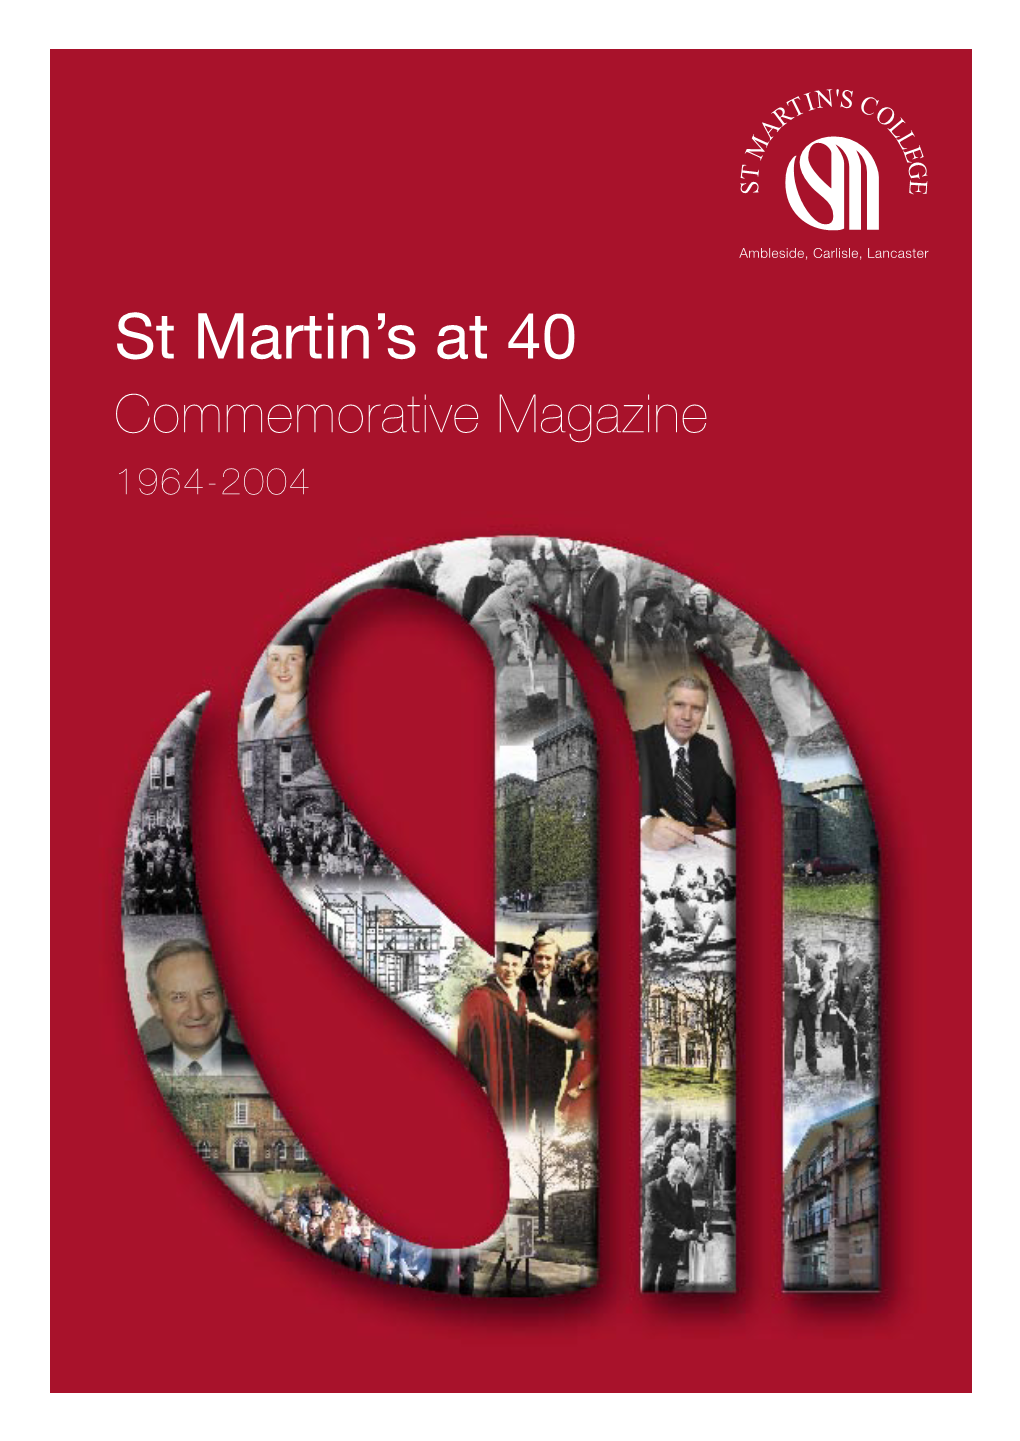 Download the St Martin's at 40 Commemorative Magazine